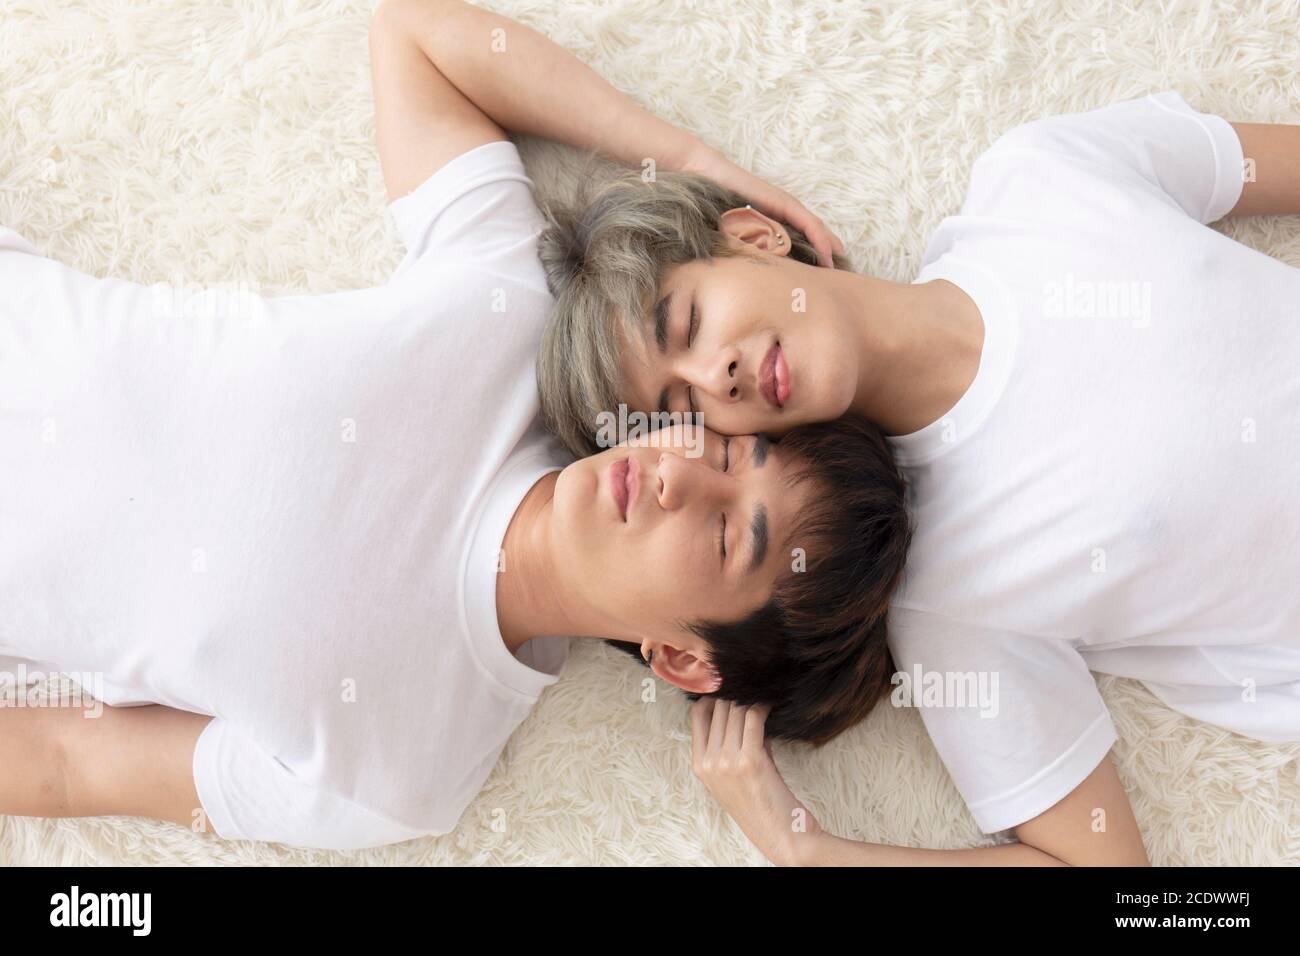 Homosexuell Paare junge Jungen asiatische Männer LGBT Konzepte. Stockfoto